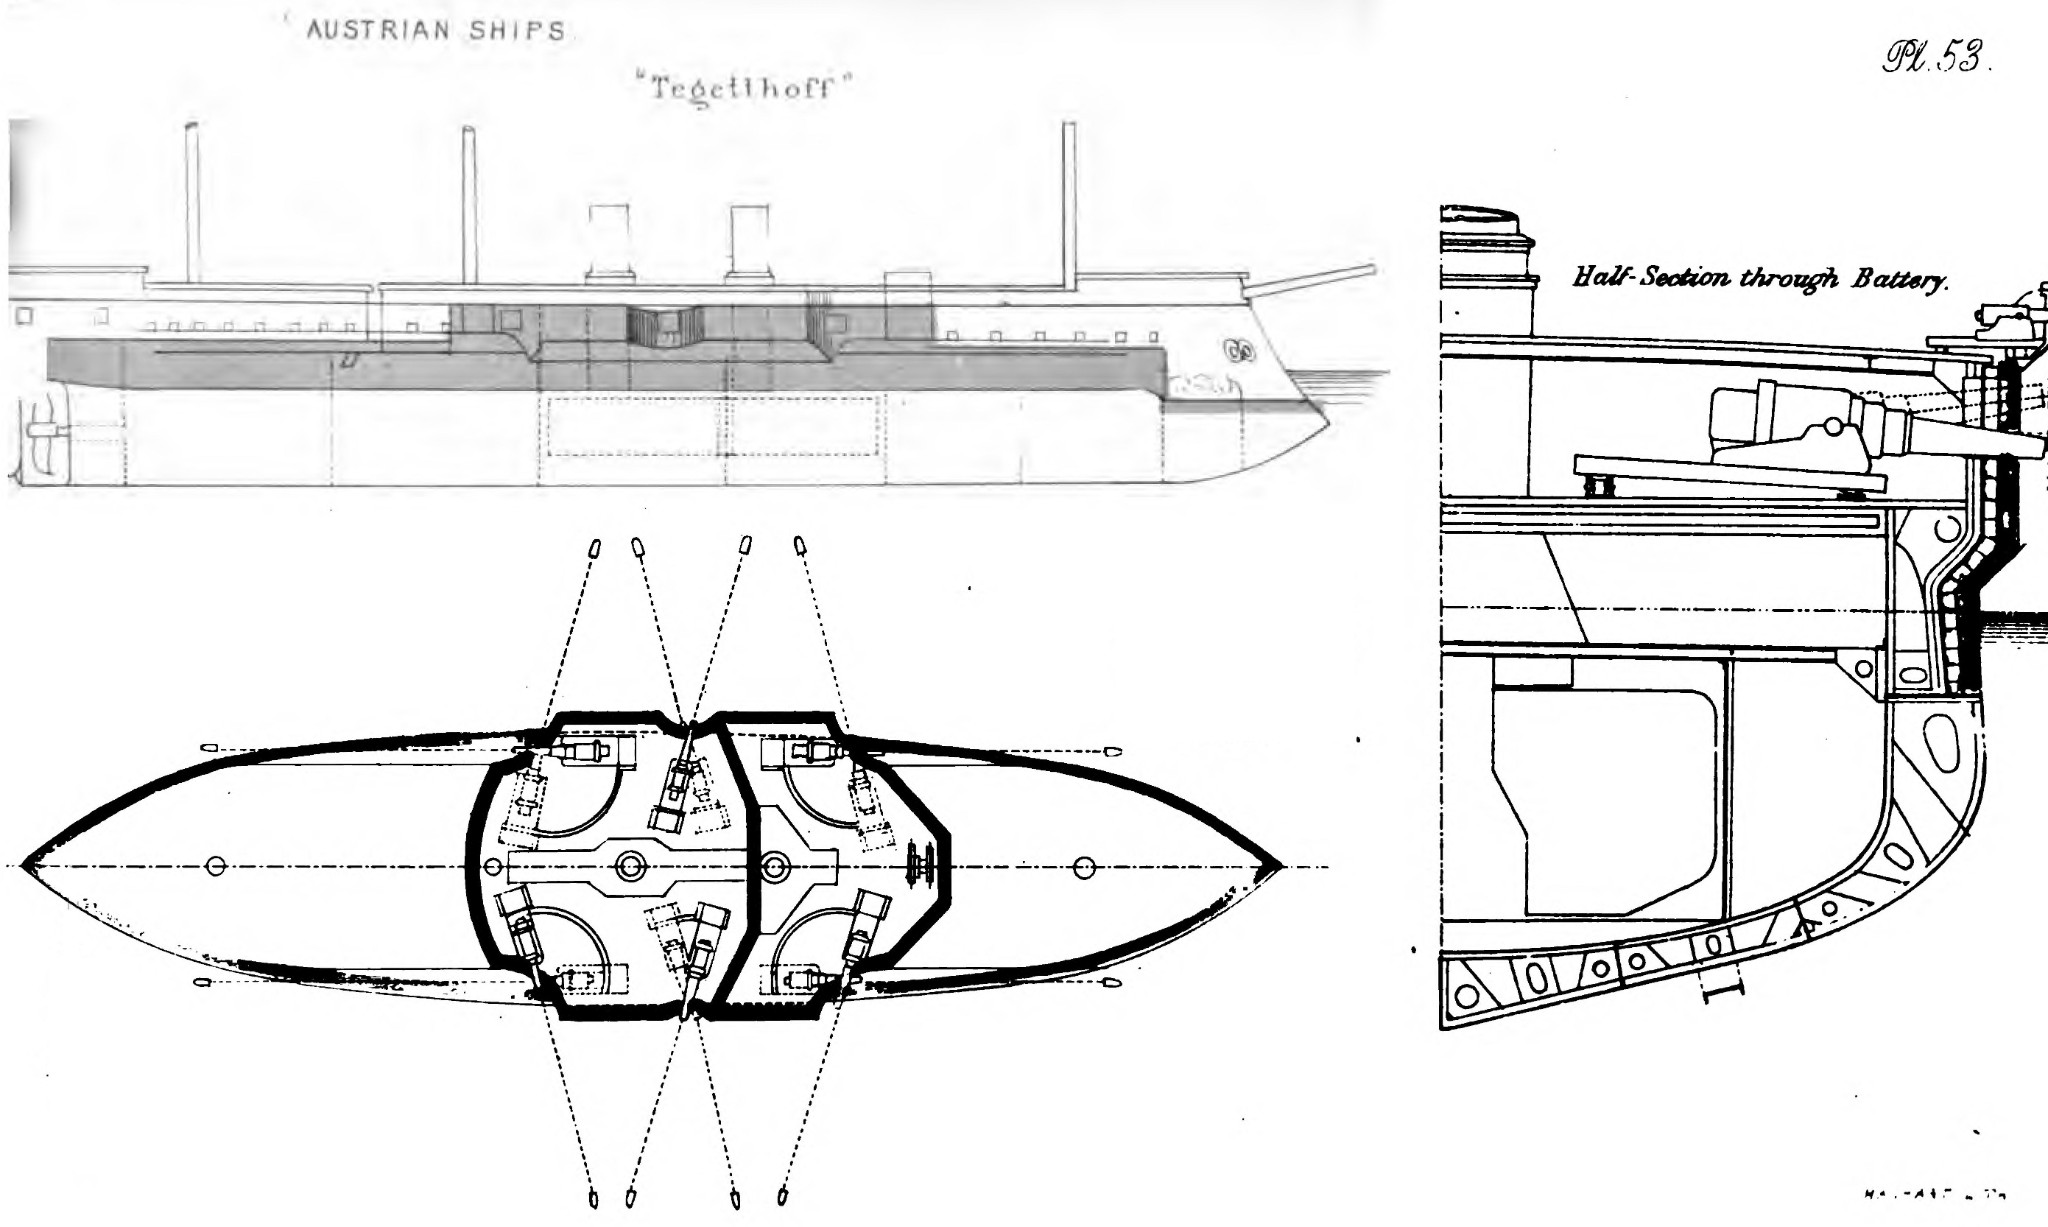 Tegetthoff_(ship,_1881)_-_Brassey's_Naval_Annual_1887.jpg